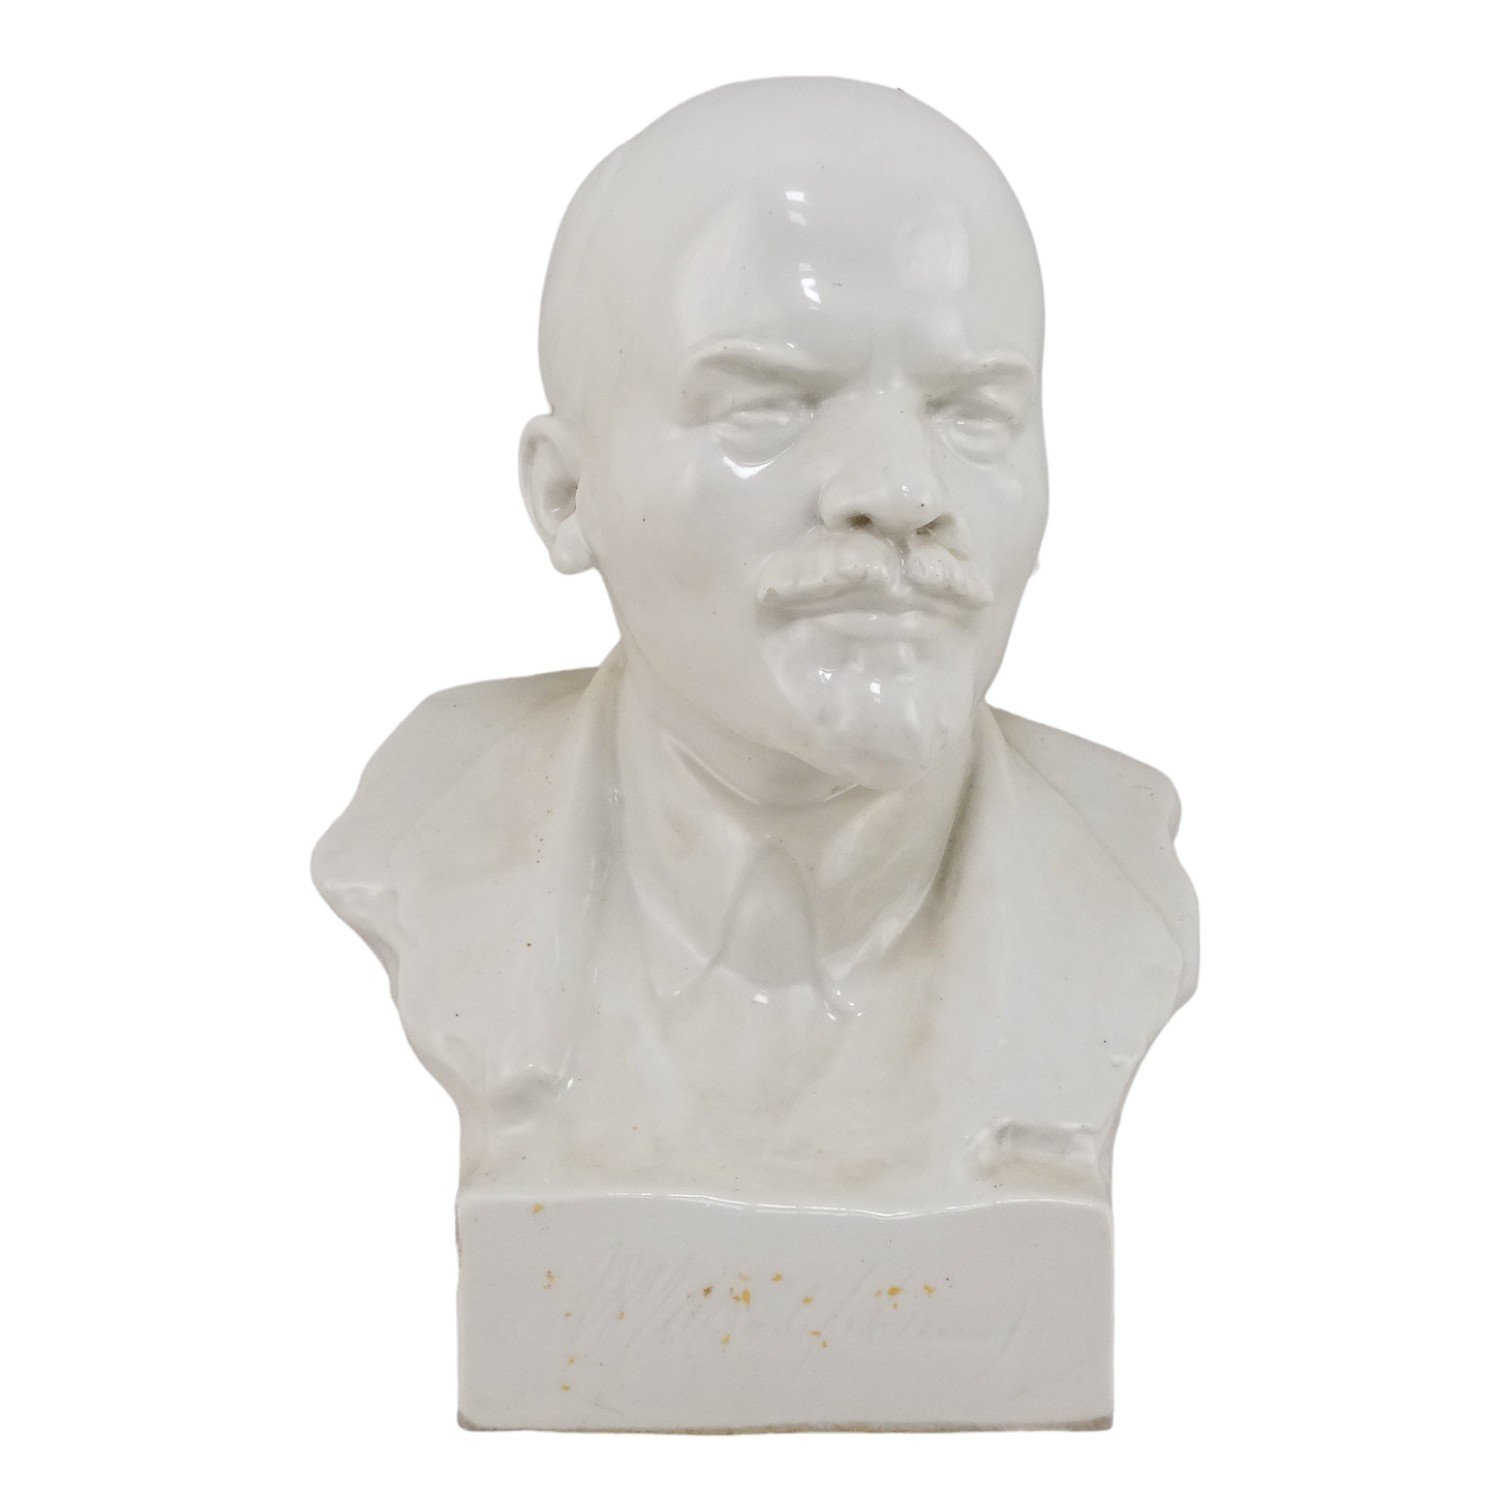 A blanc de chine figure of Lenin - bearing facsimile signature to square base and indistinctly